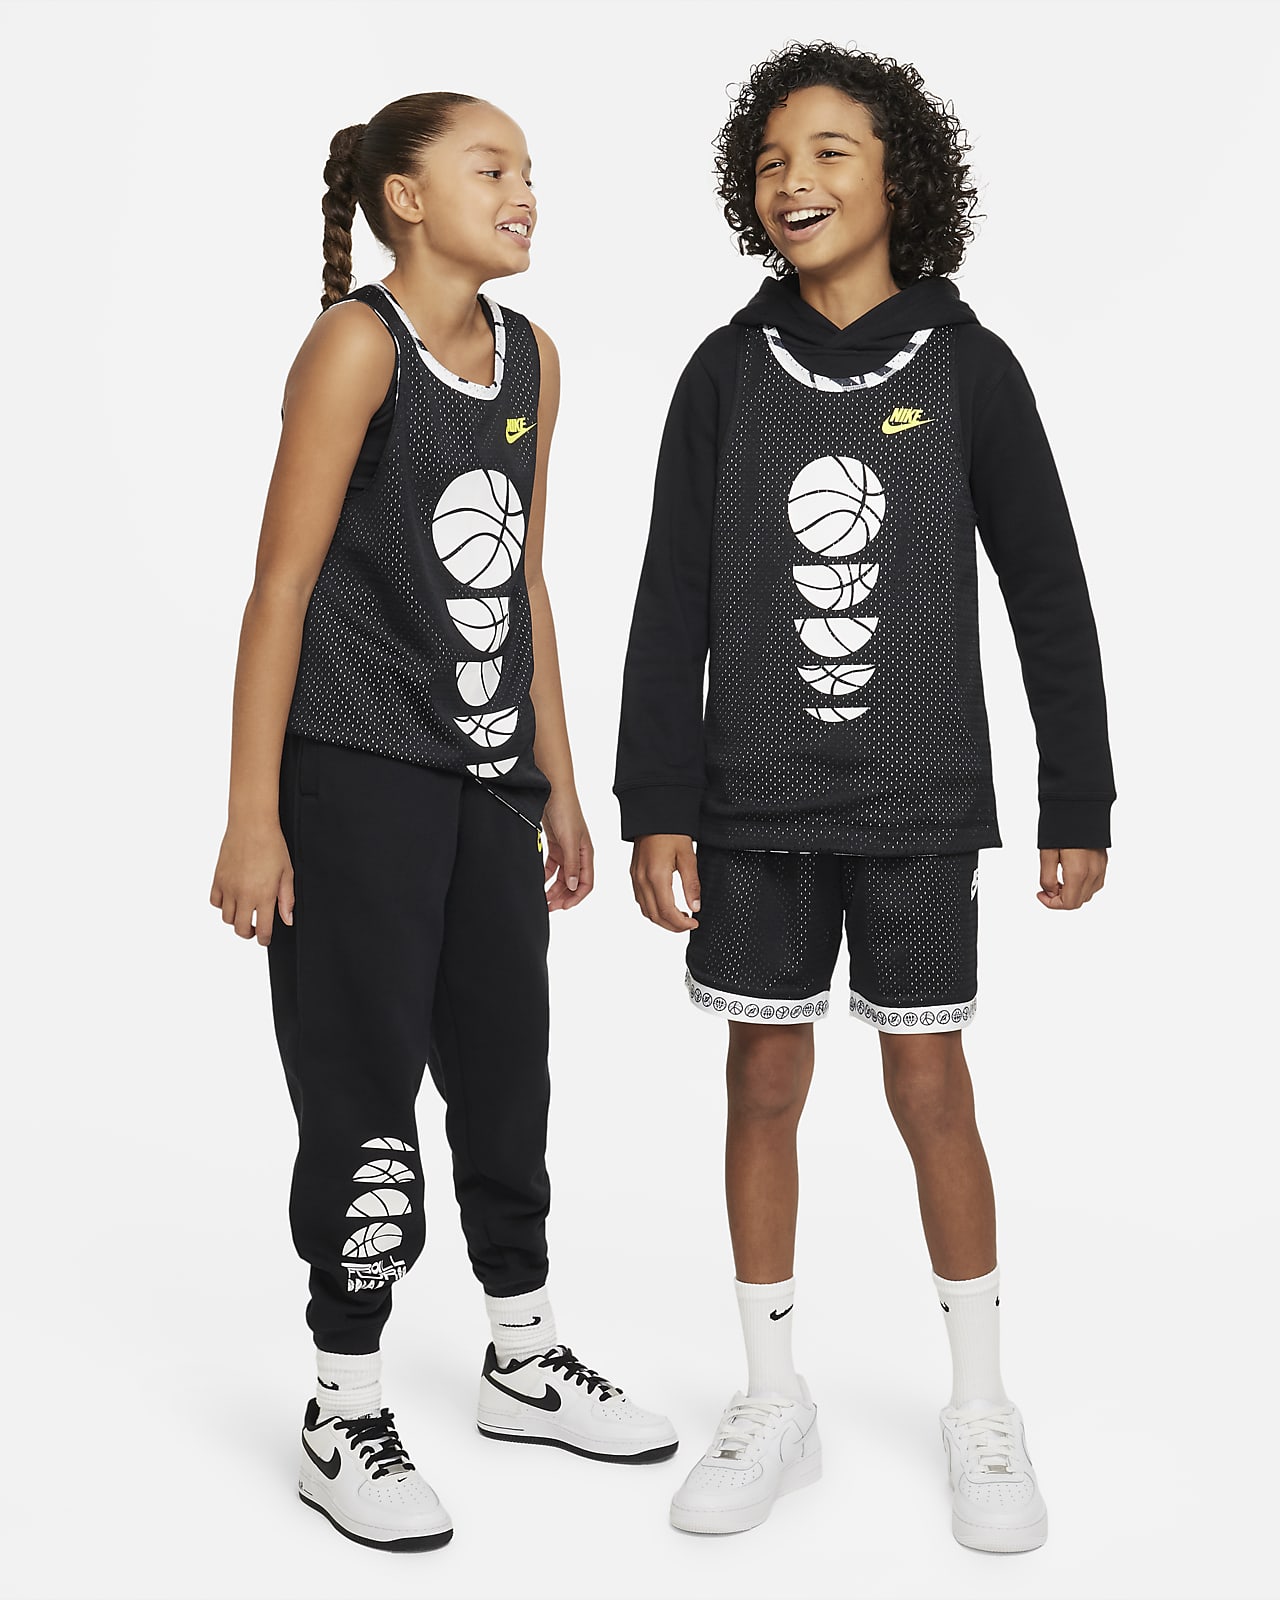 Nike Culture of Basketball Big Kids' Reversible Basketball Jersey